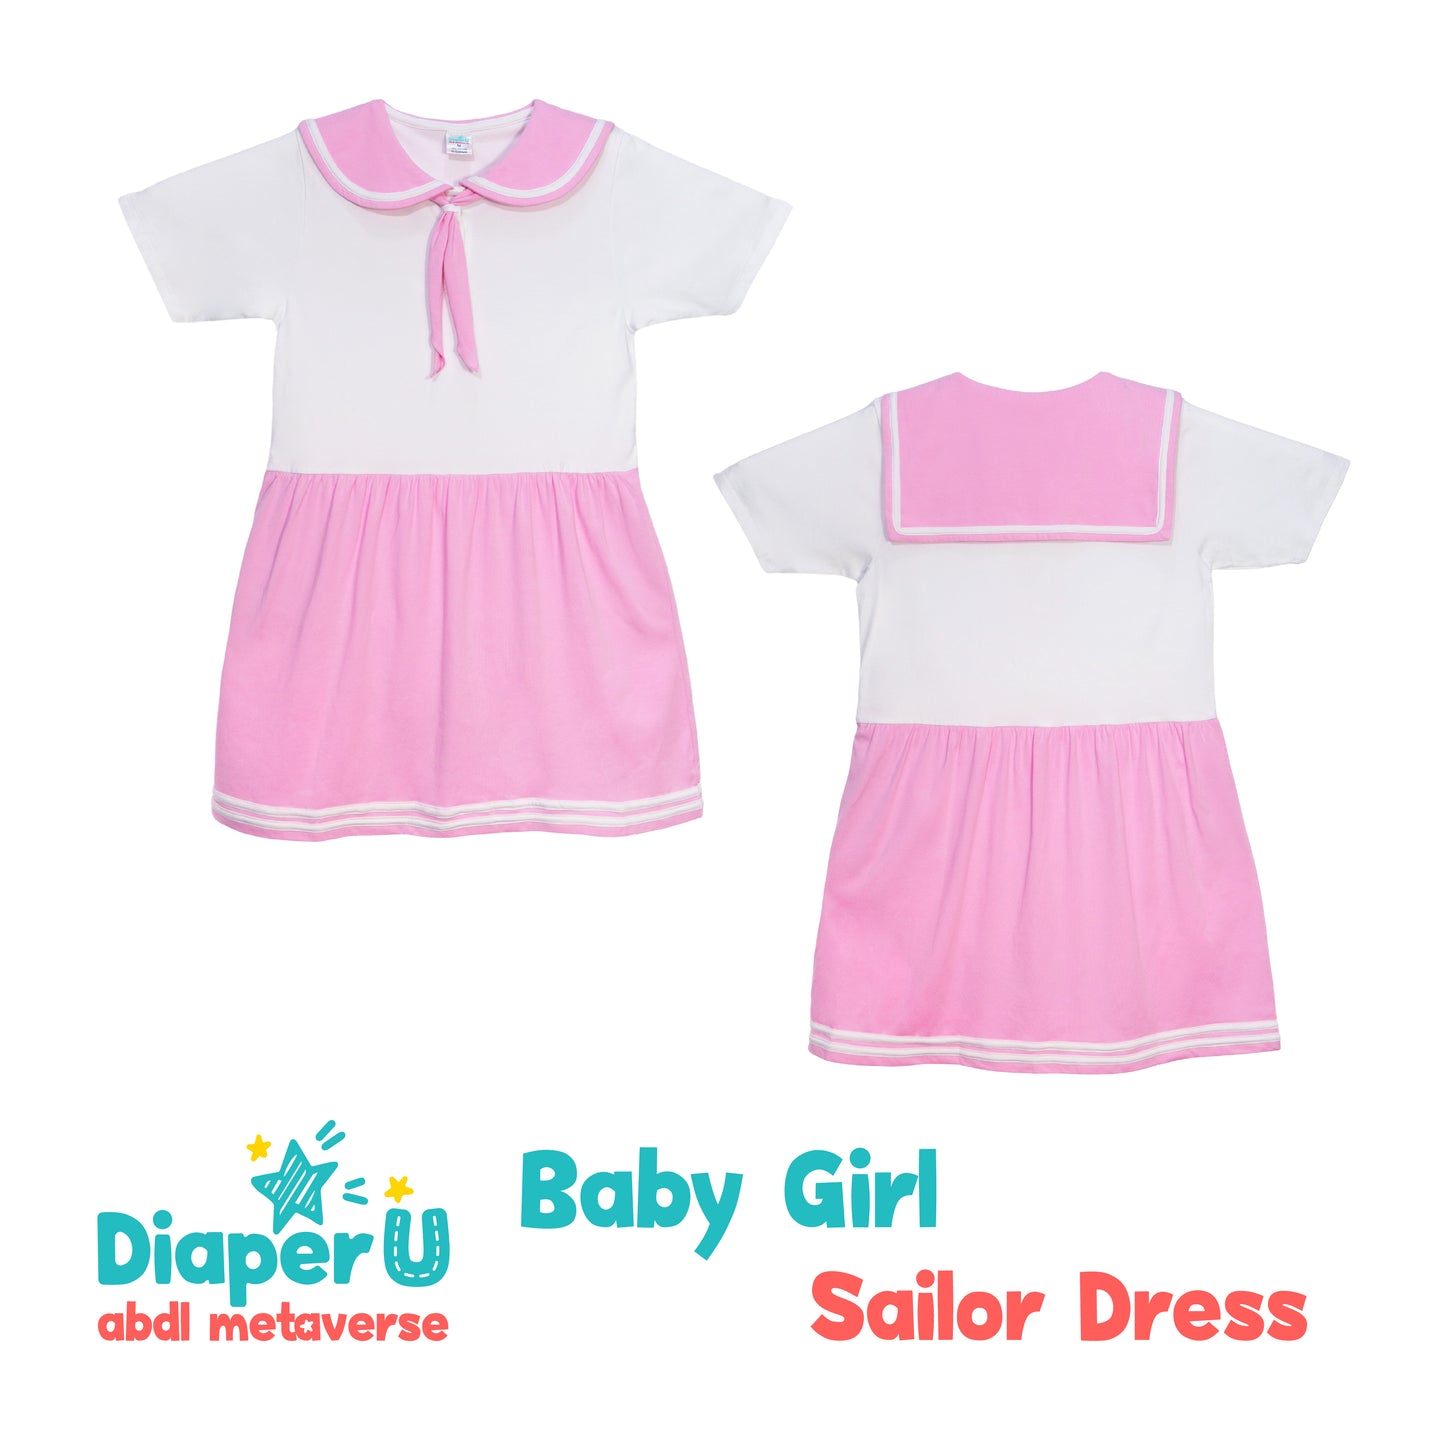 Baby Girl Sailor Dress